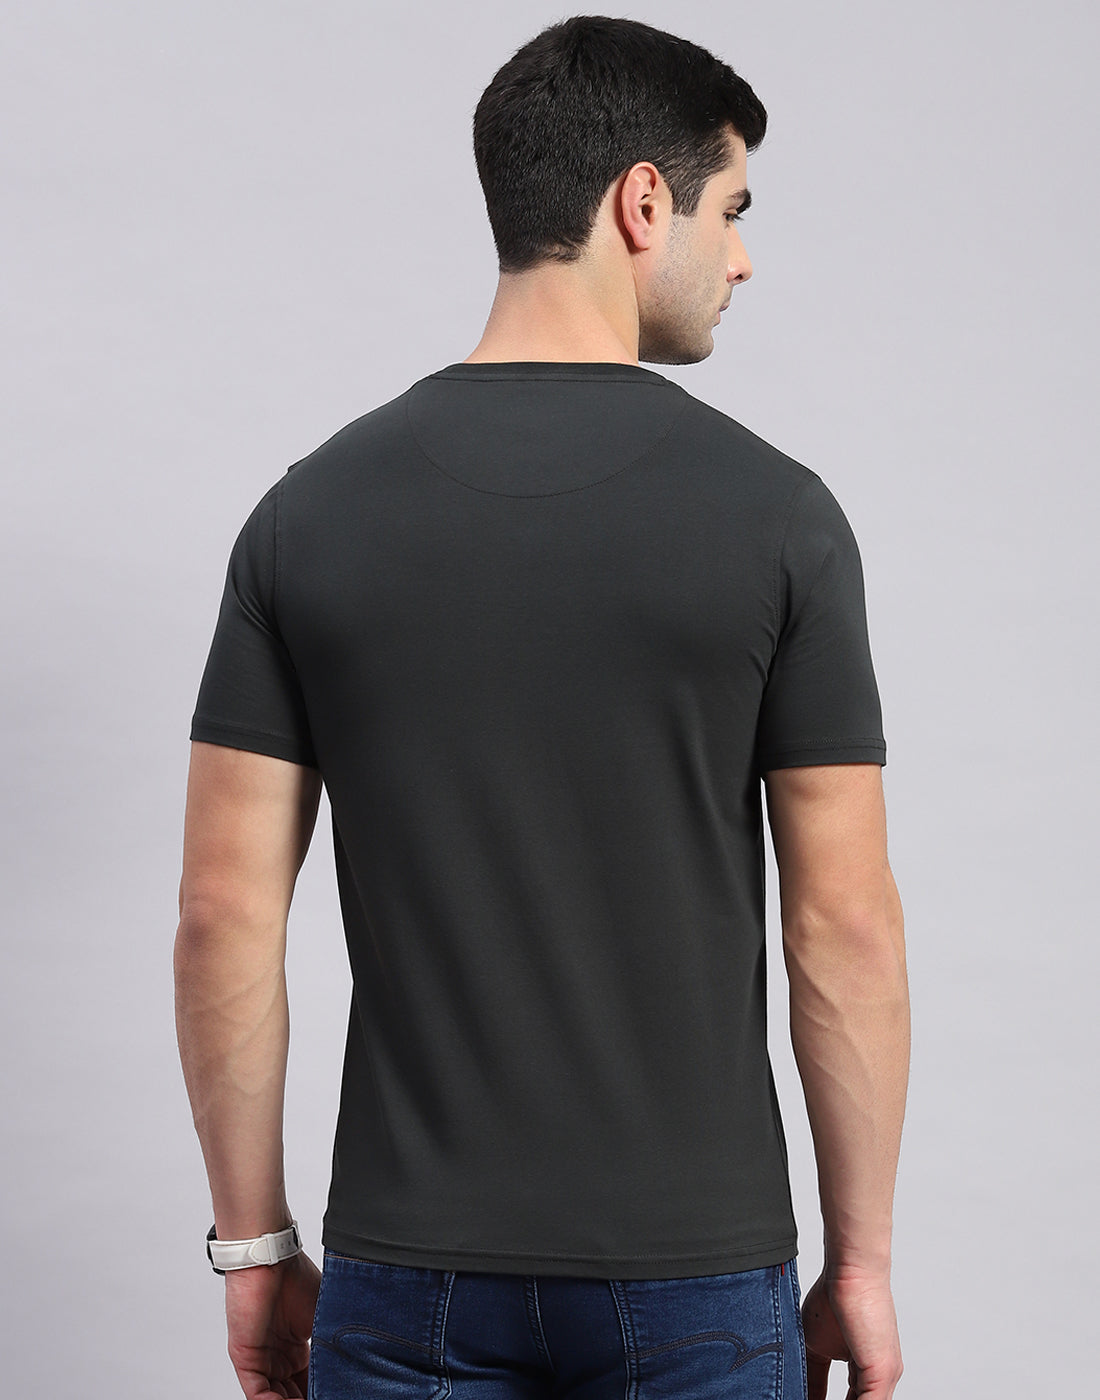 Men Olive Printed Round Neck Half Sleeve T-Shirt